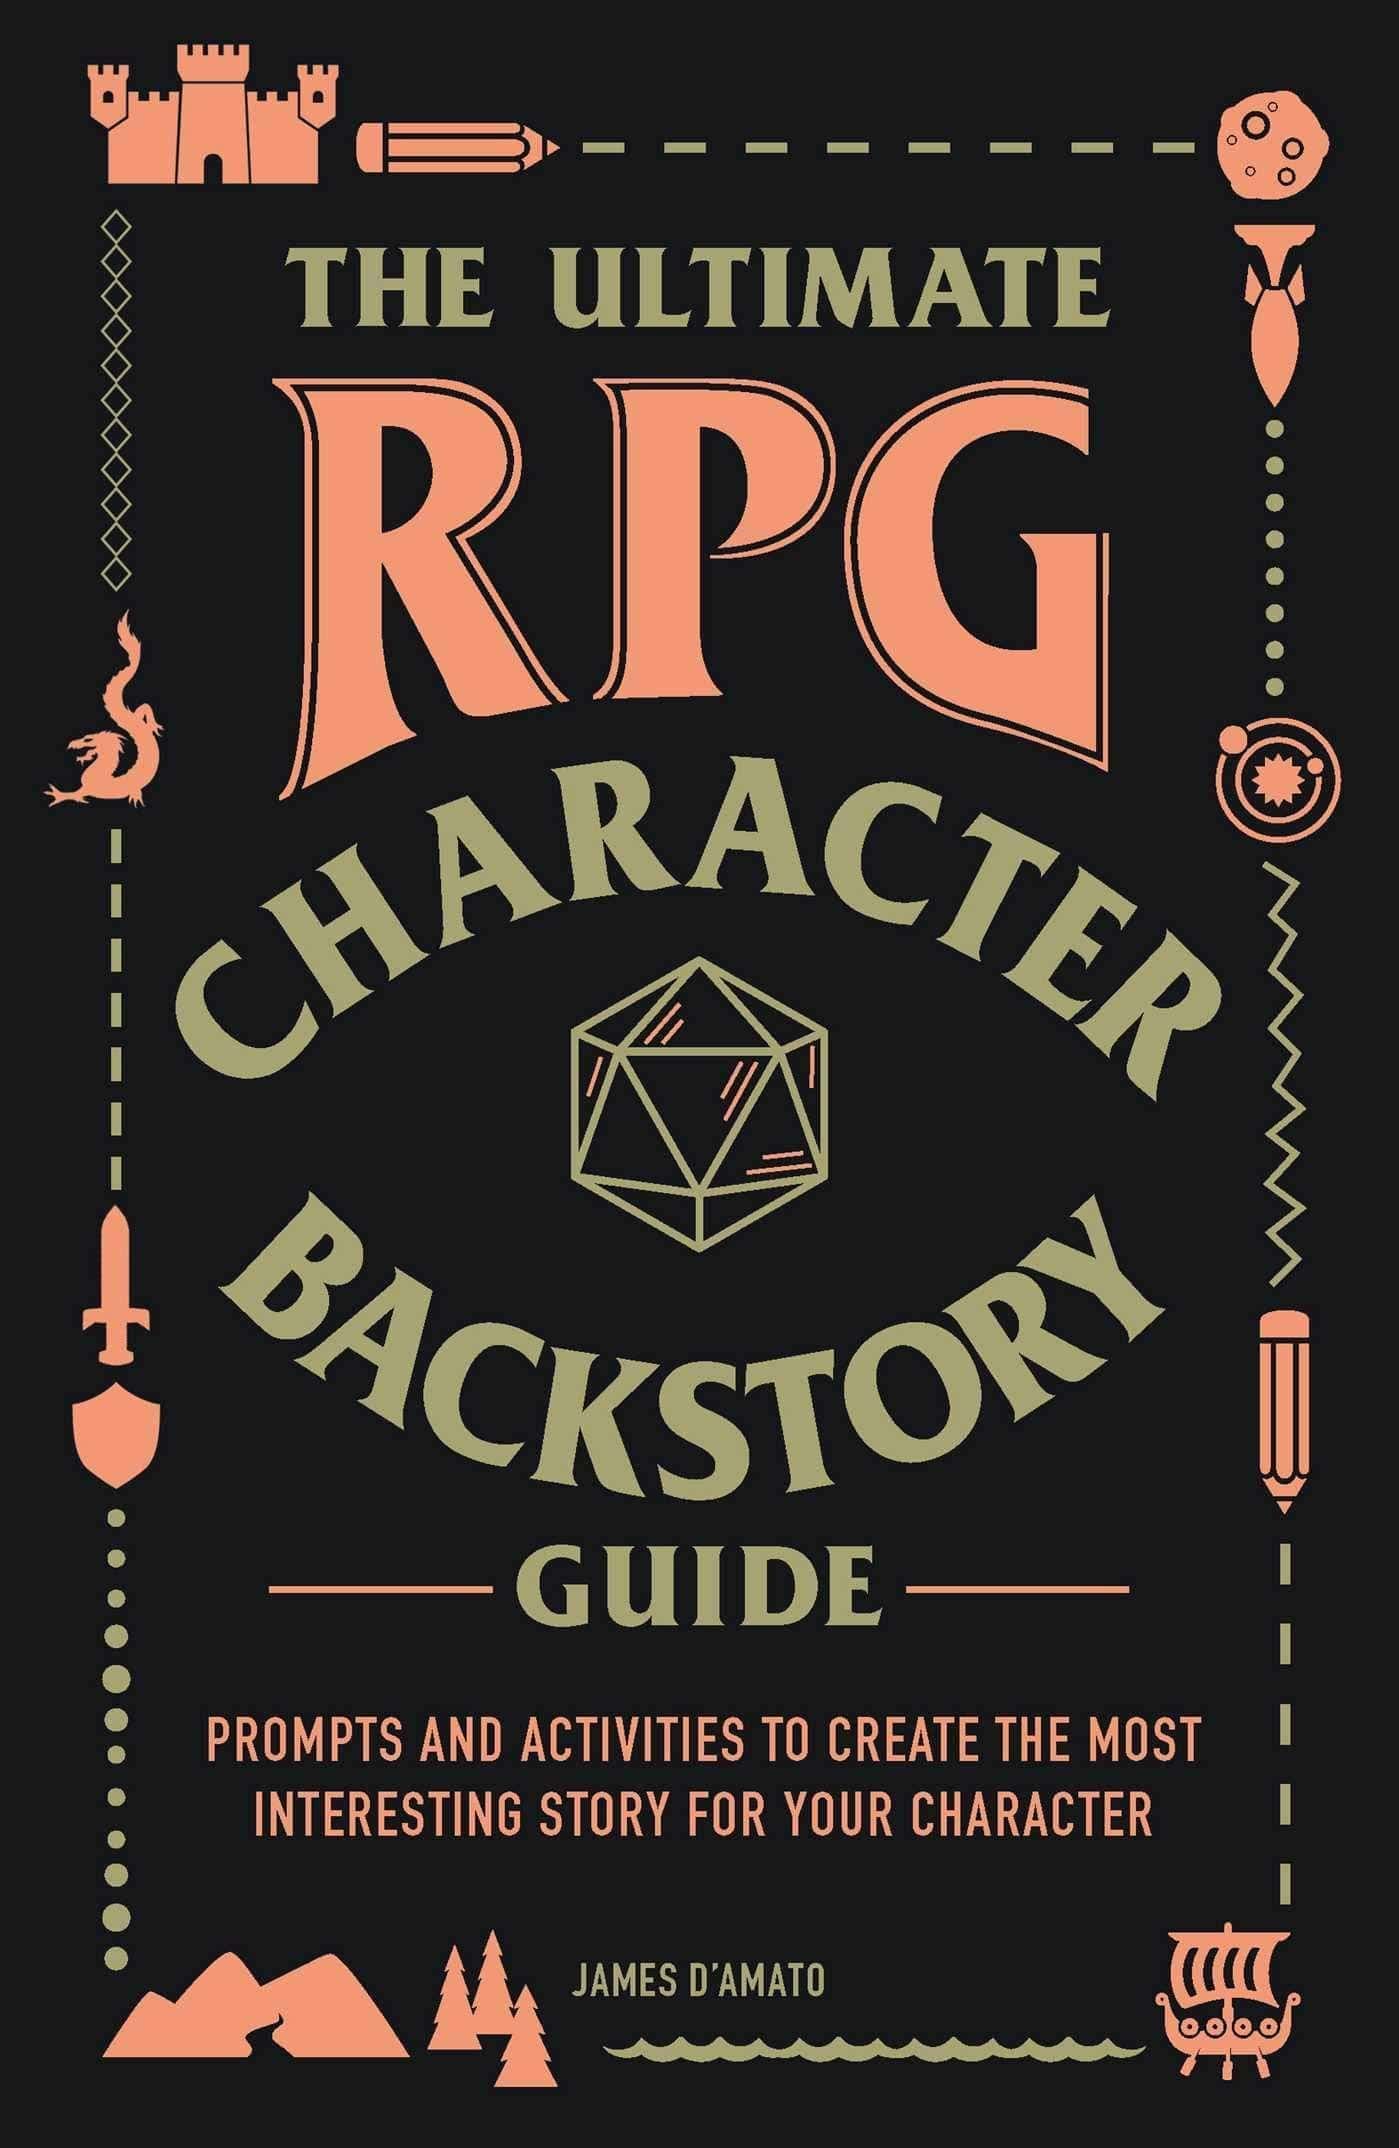 The Ultimate RPG Character Backstory Guide - SureShot Books Publishing LLC